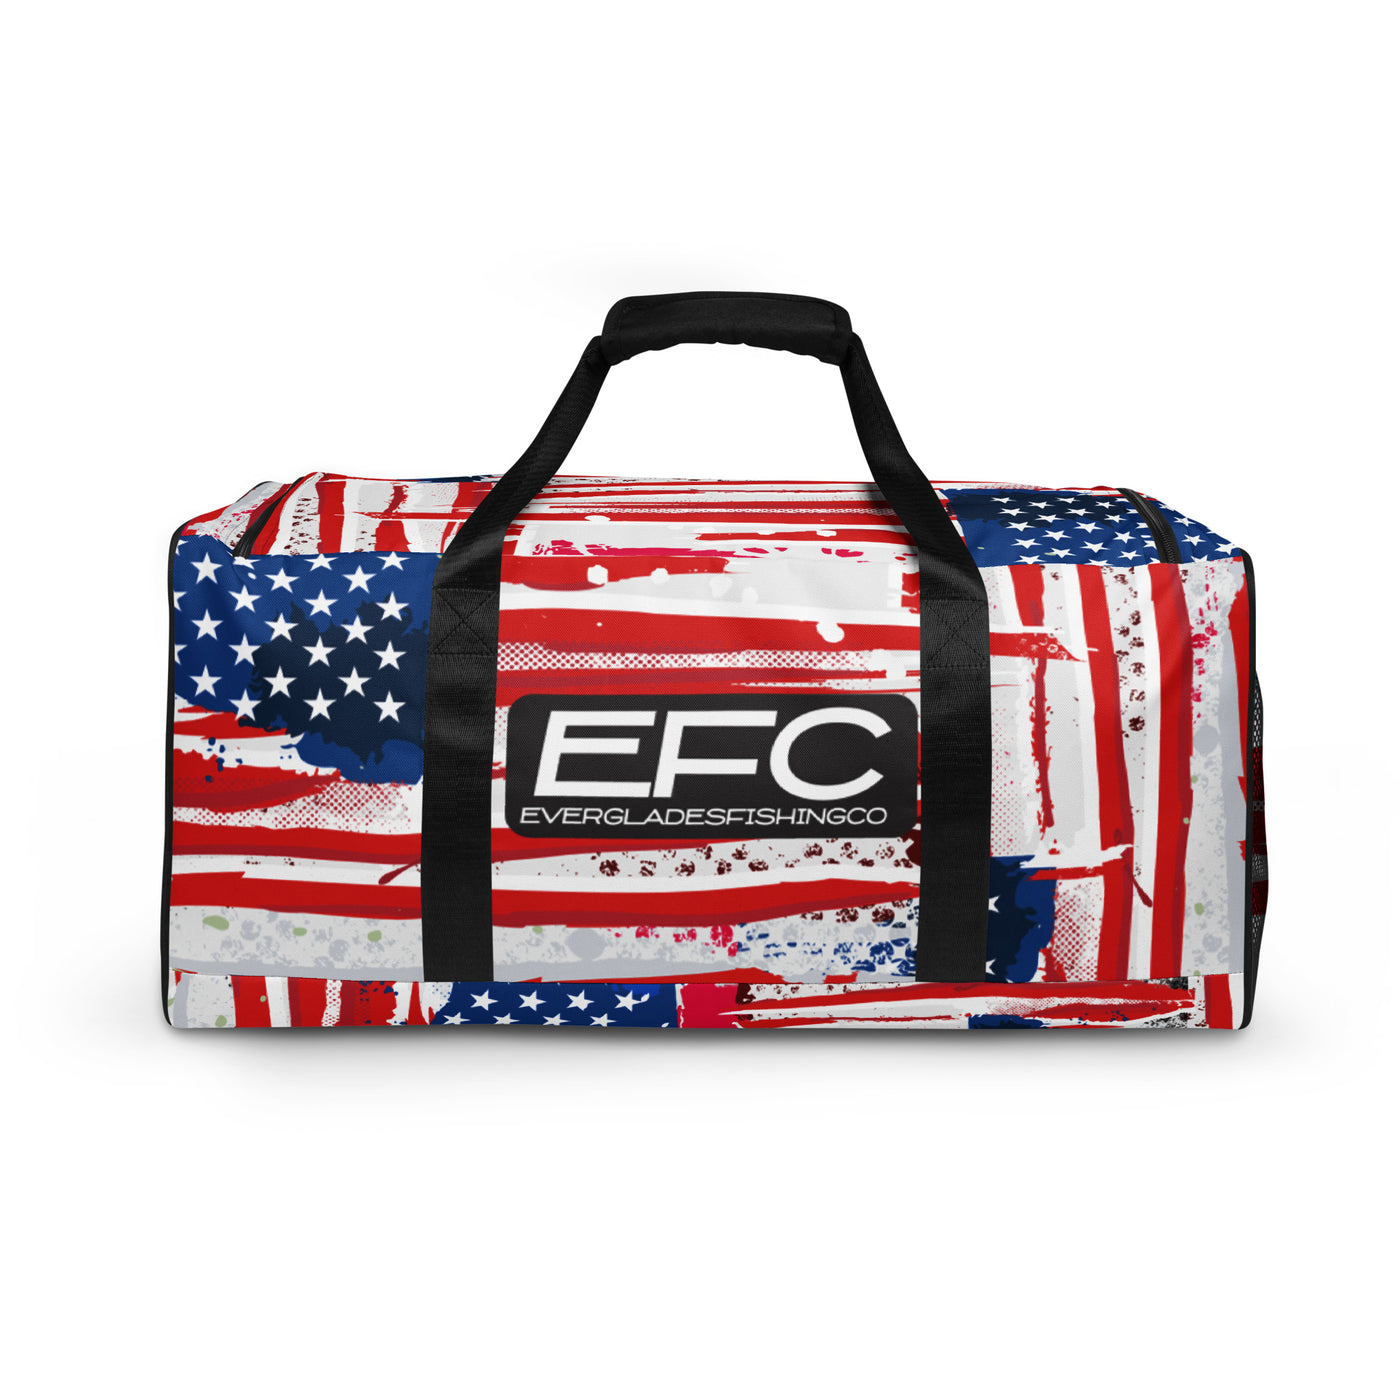 EFC USA Duffle bag